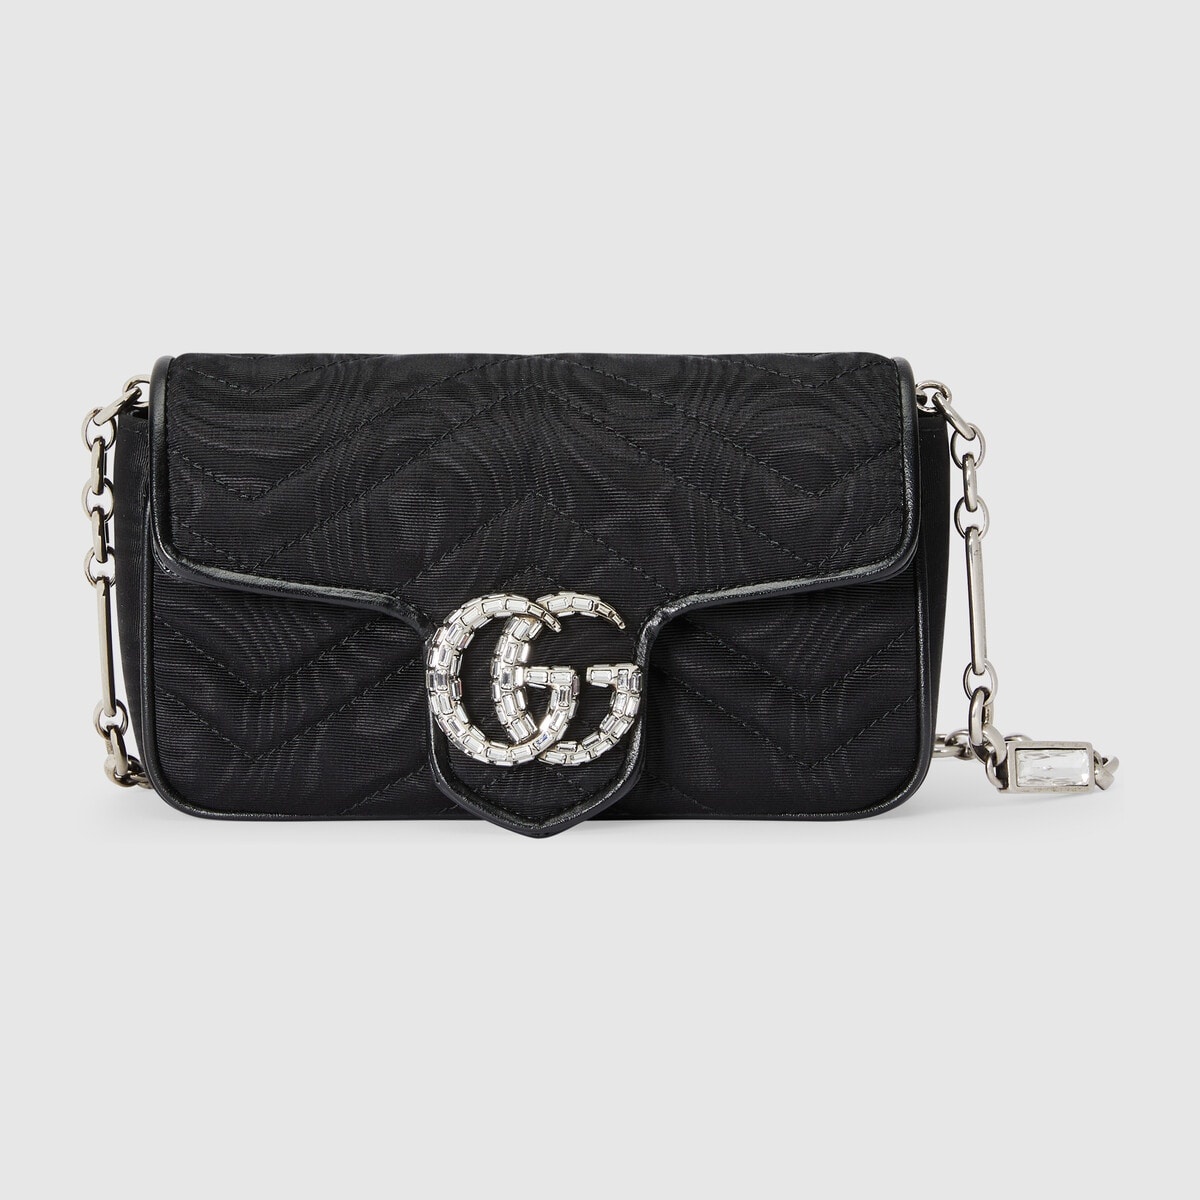 GG Marmont belt bag - 1